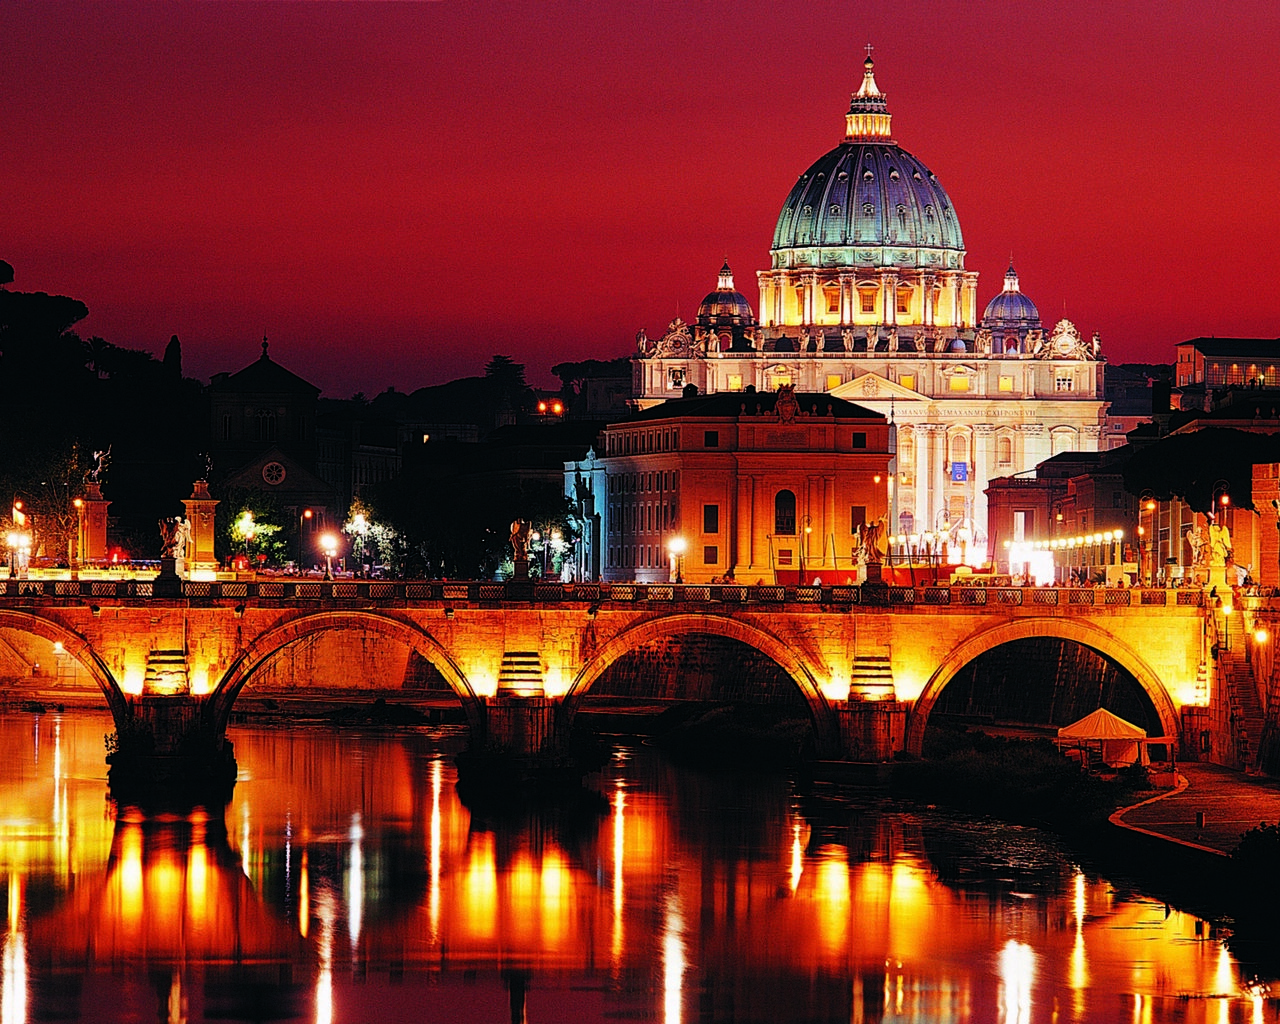 Rome Fire Vatican